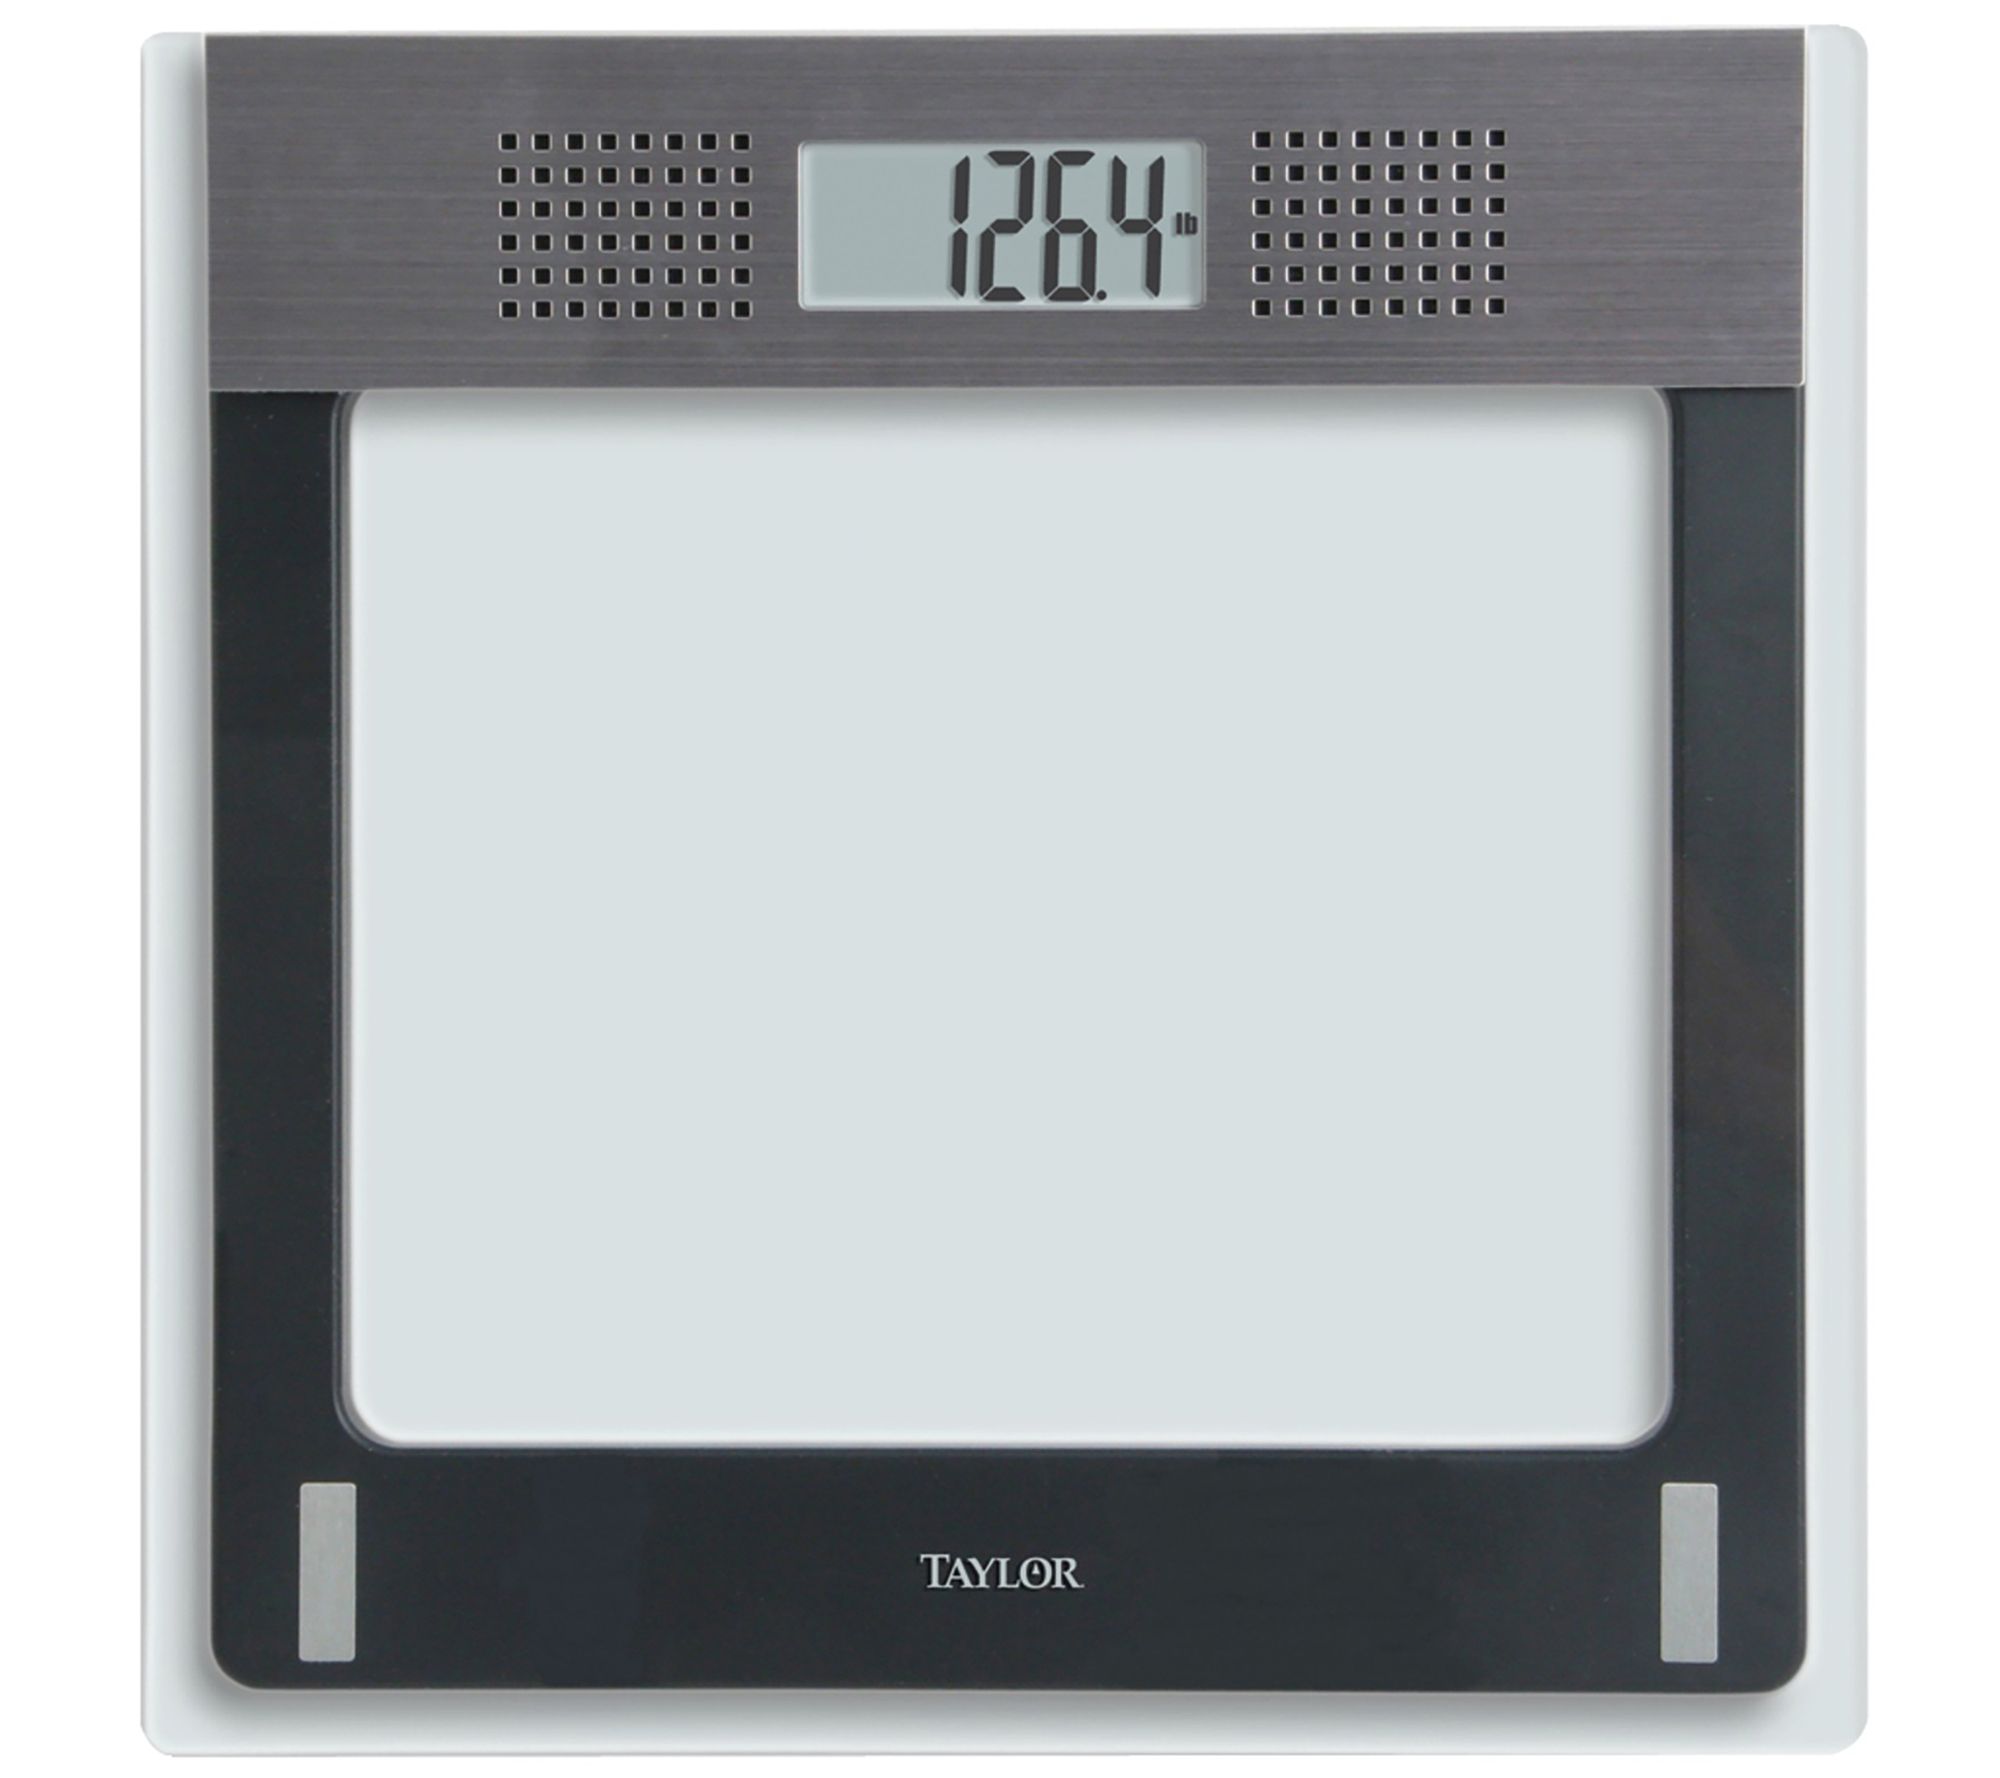 Taylor 400 lb. Digital Bathroom Scale White - Total Qty: 2, Case